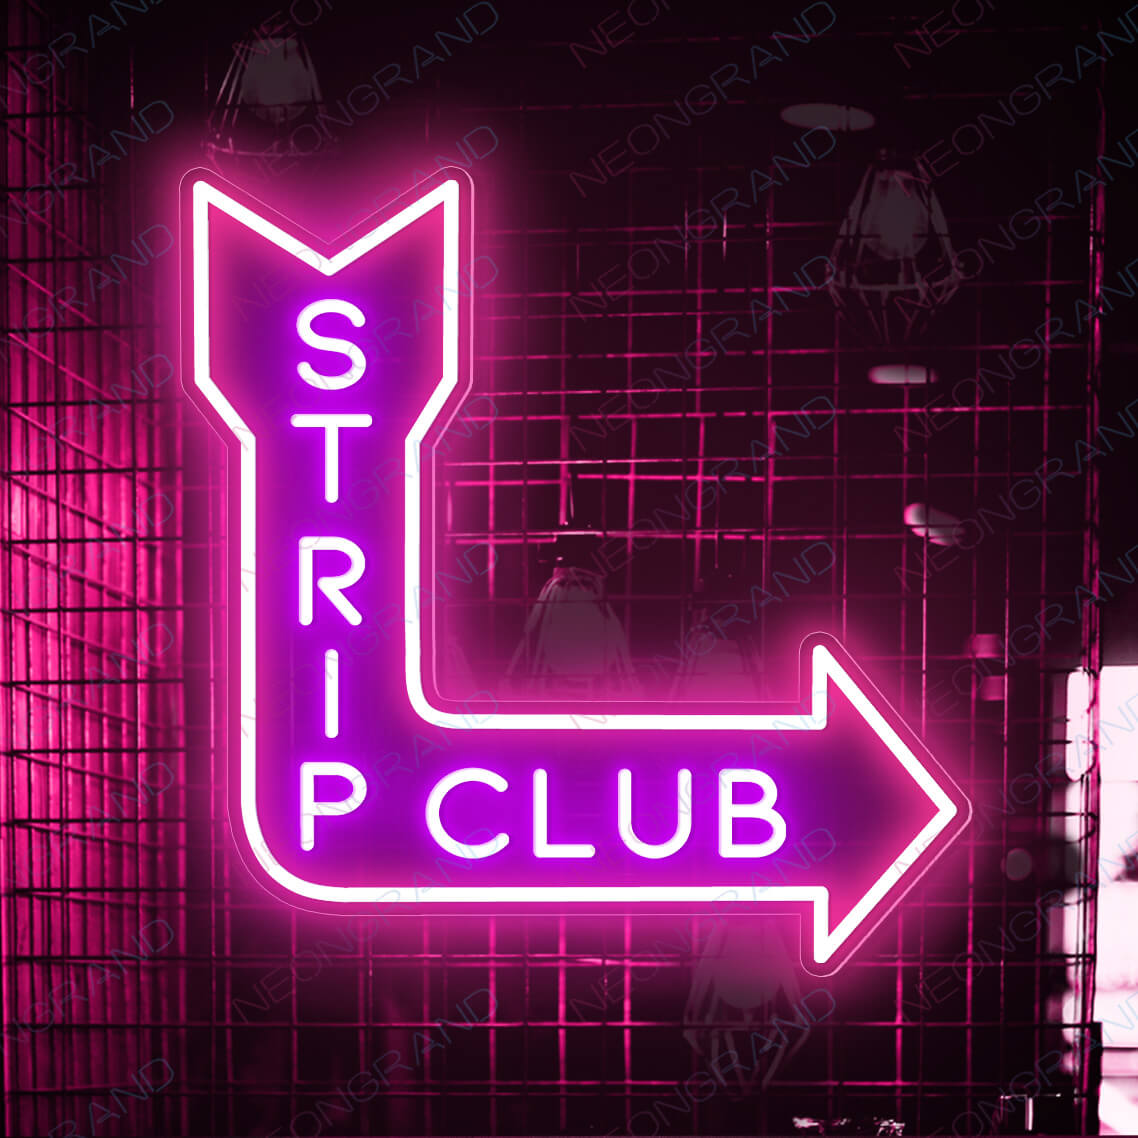 Strip Club Neon Sign Bar Led Light purple